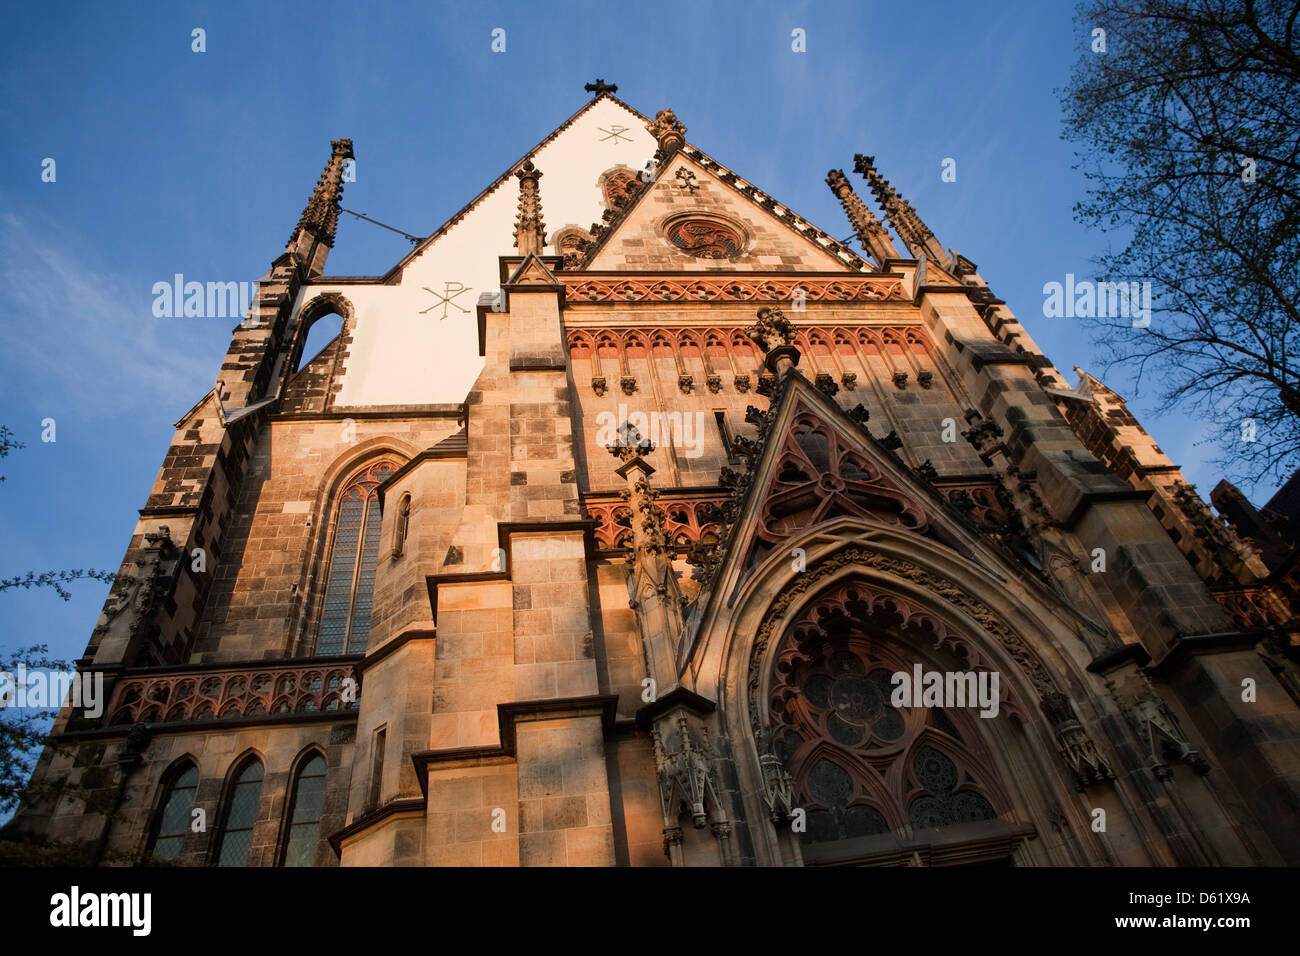 Front entrance of Leipzig, Germany's landmark St. Thomas Church, The Church of Bach. Stock Photo